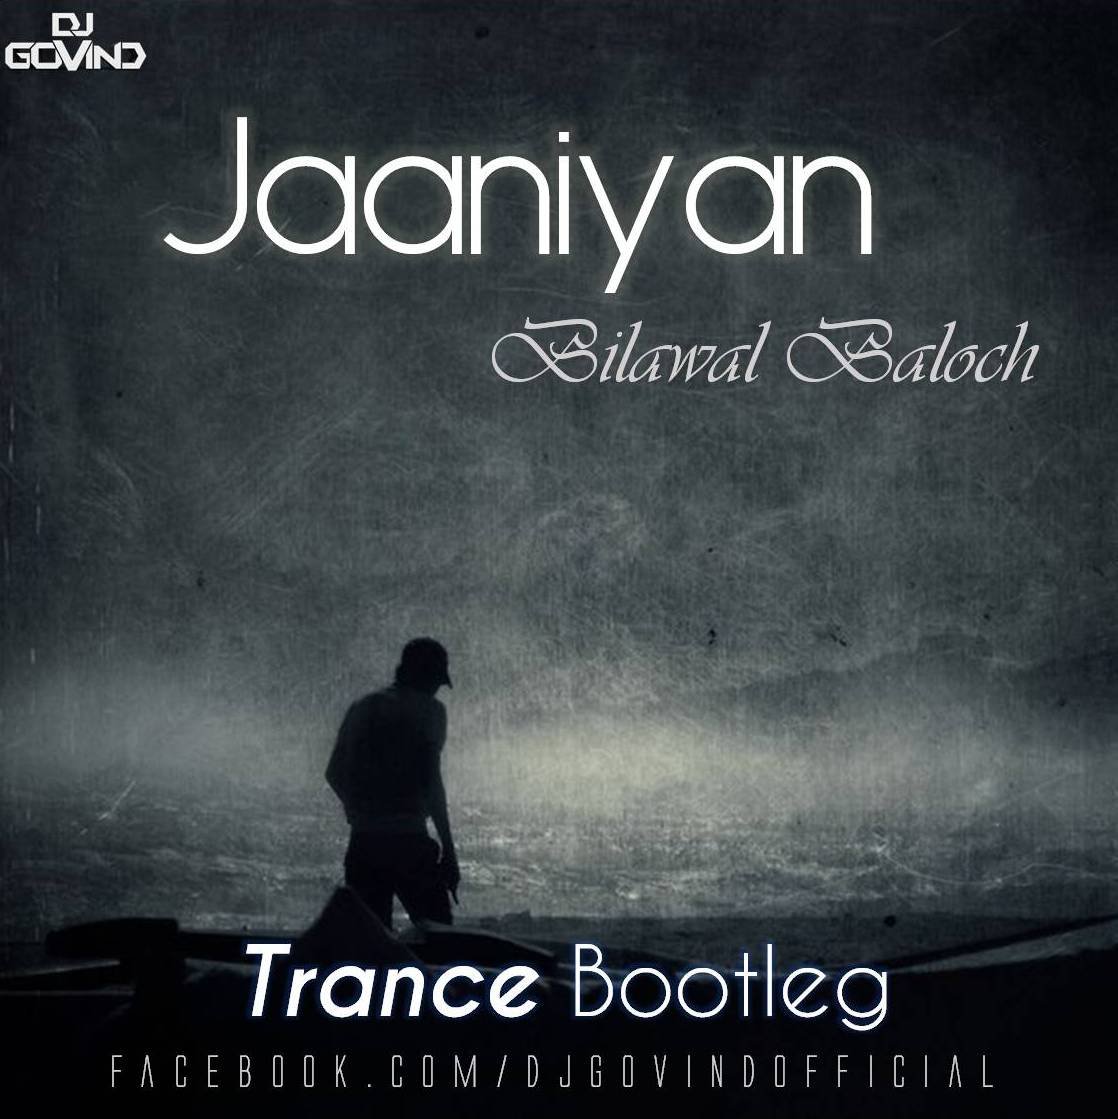 Jaaniyan (Bilawal Baloch) - DJ Govind Trance Bootleg